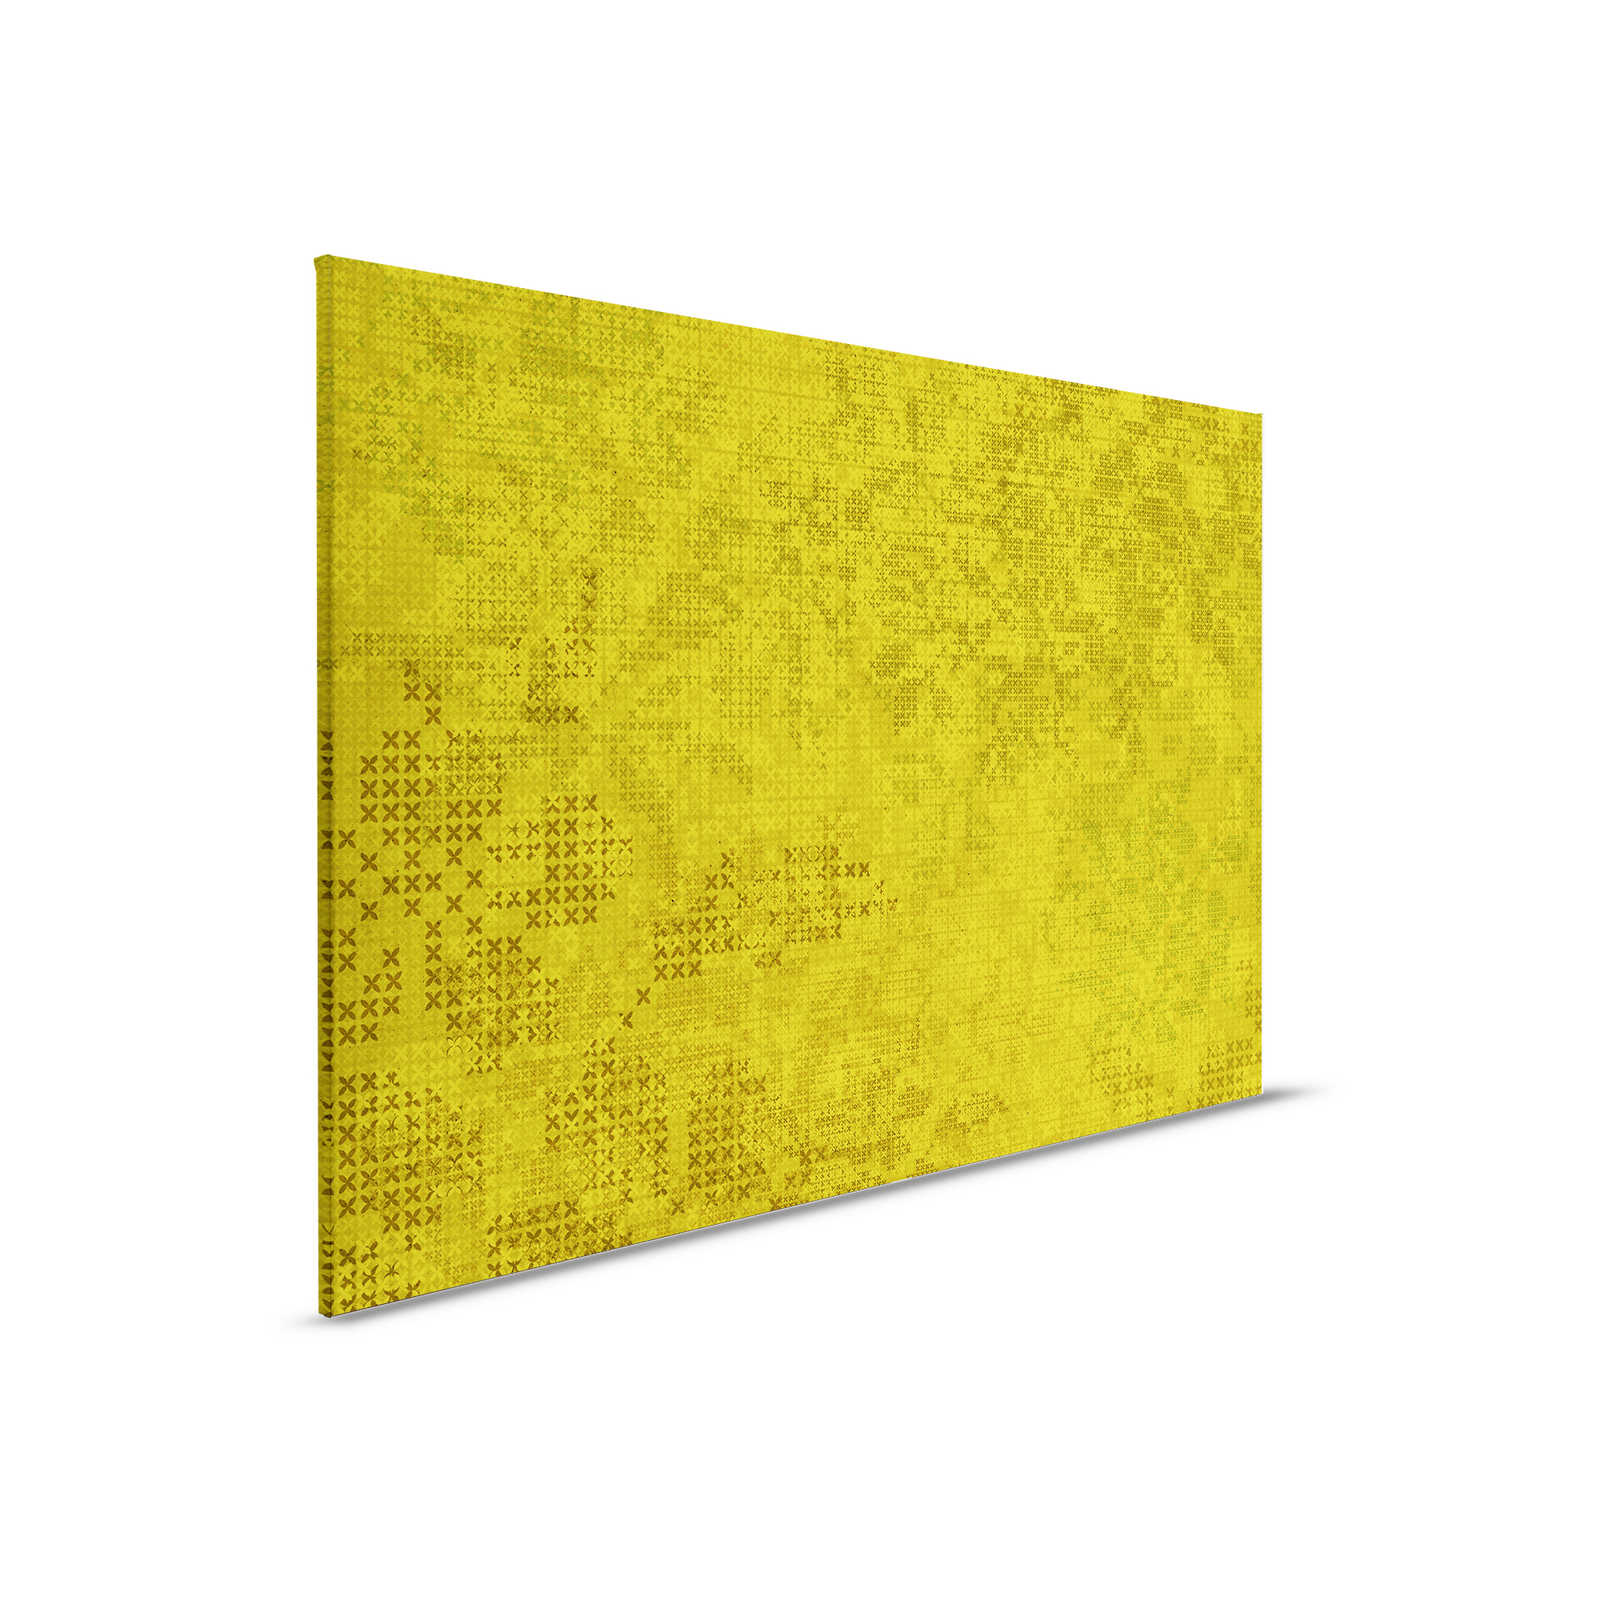 Pixel Canvas schilderij Kruissteek patroon - 0,90 m x 0,60 m
